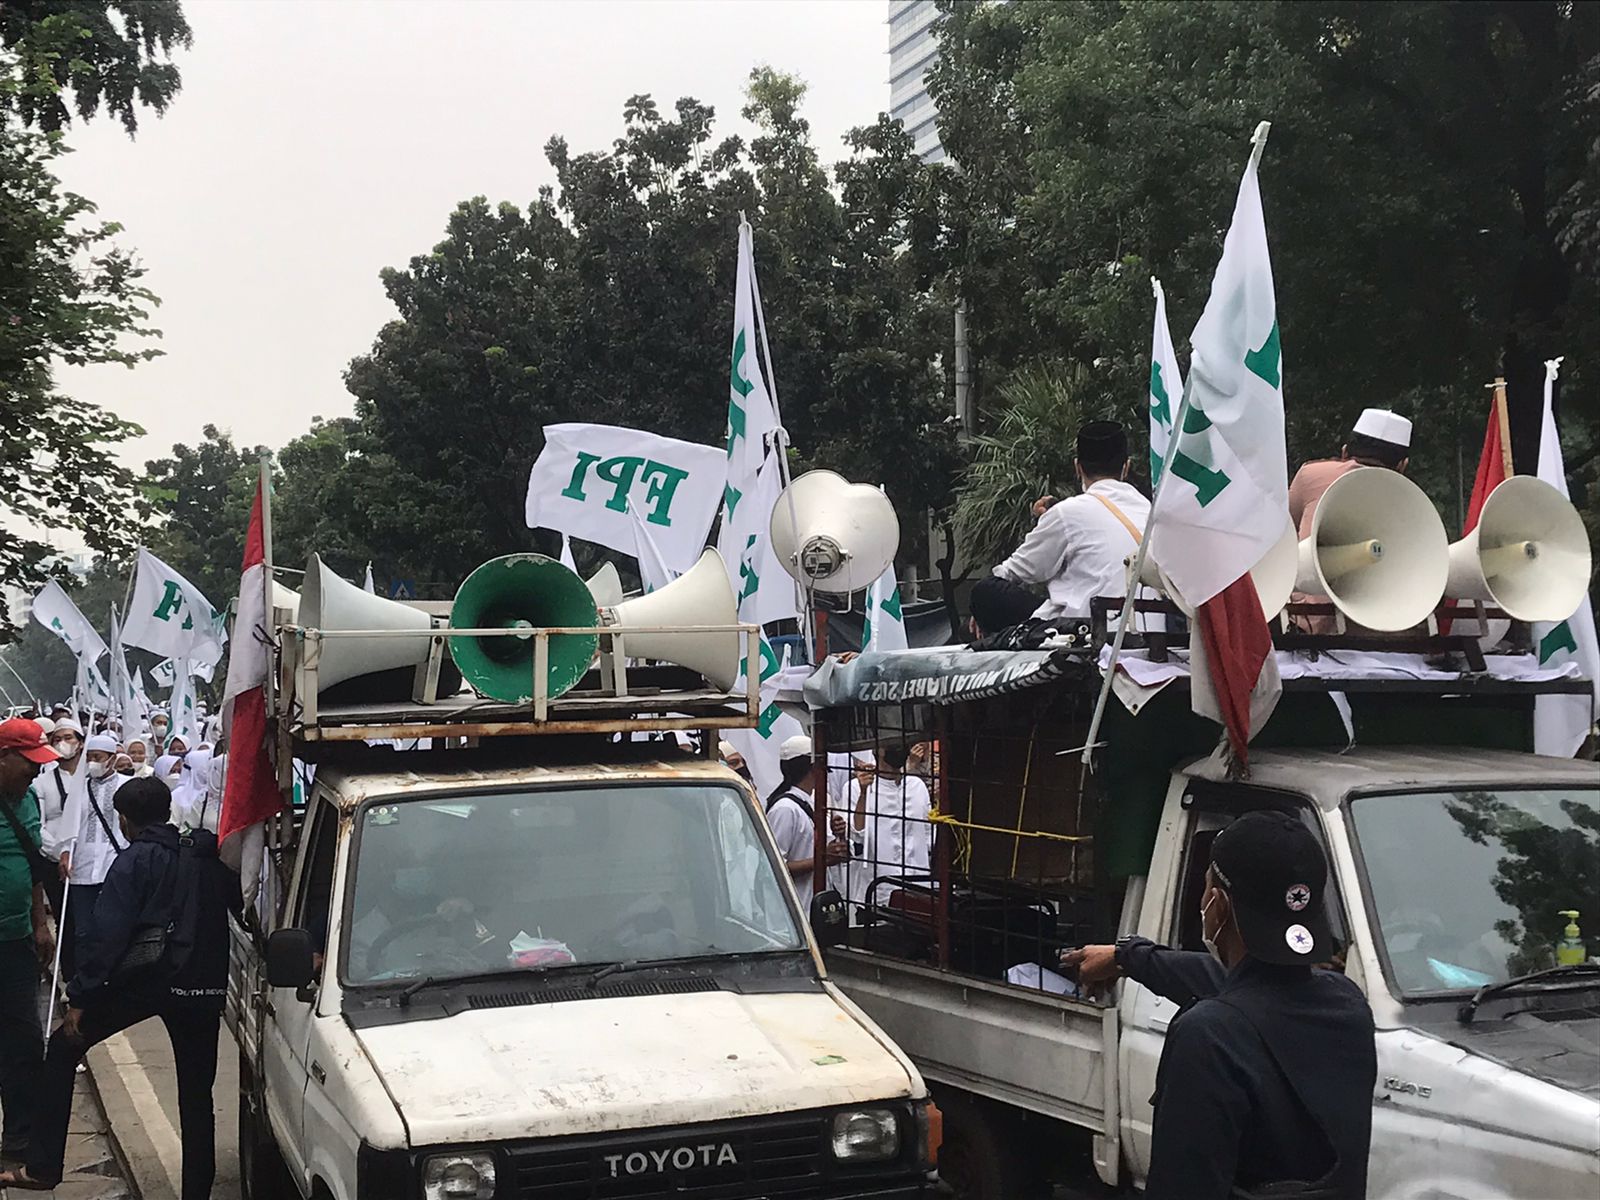 Mobil Komando FPI Reborn Pakai Plat Palsu, Pernah Dipakai Demo PDIP Jakarta Utara 